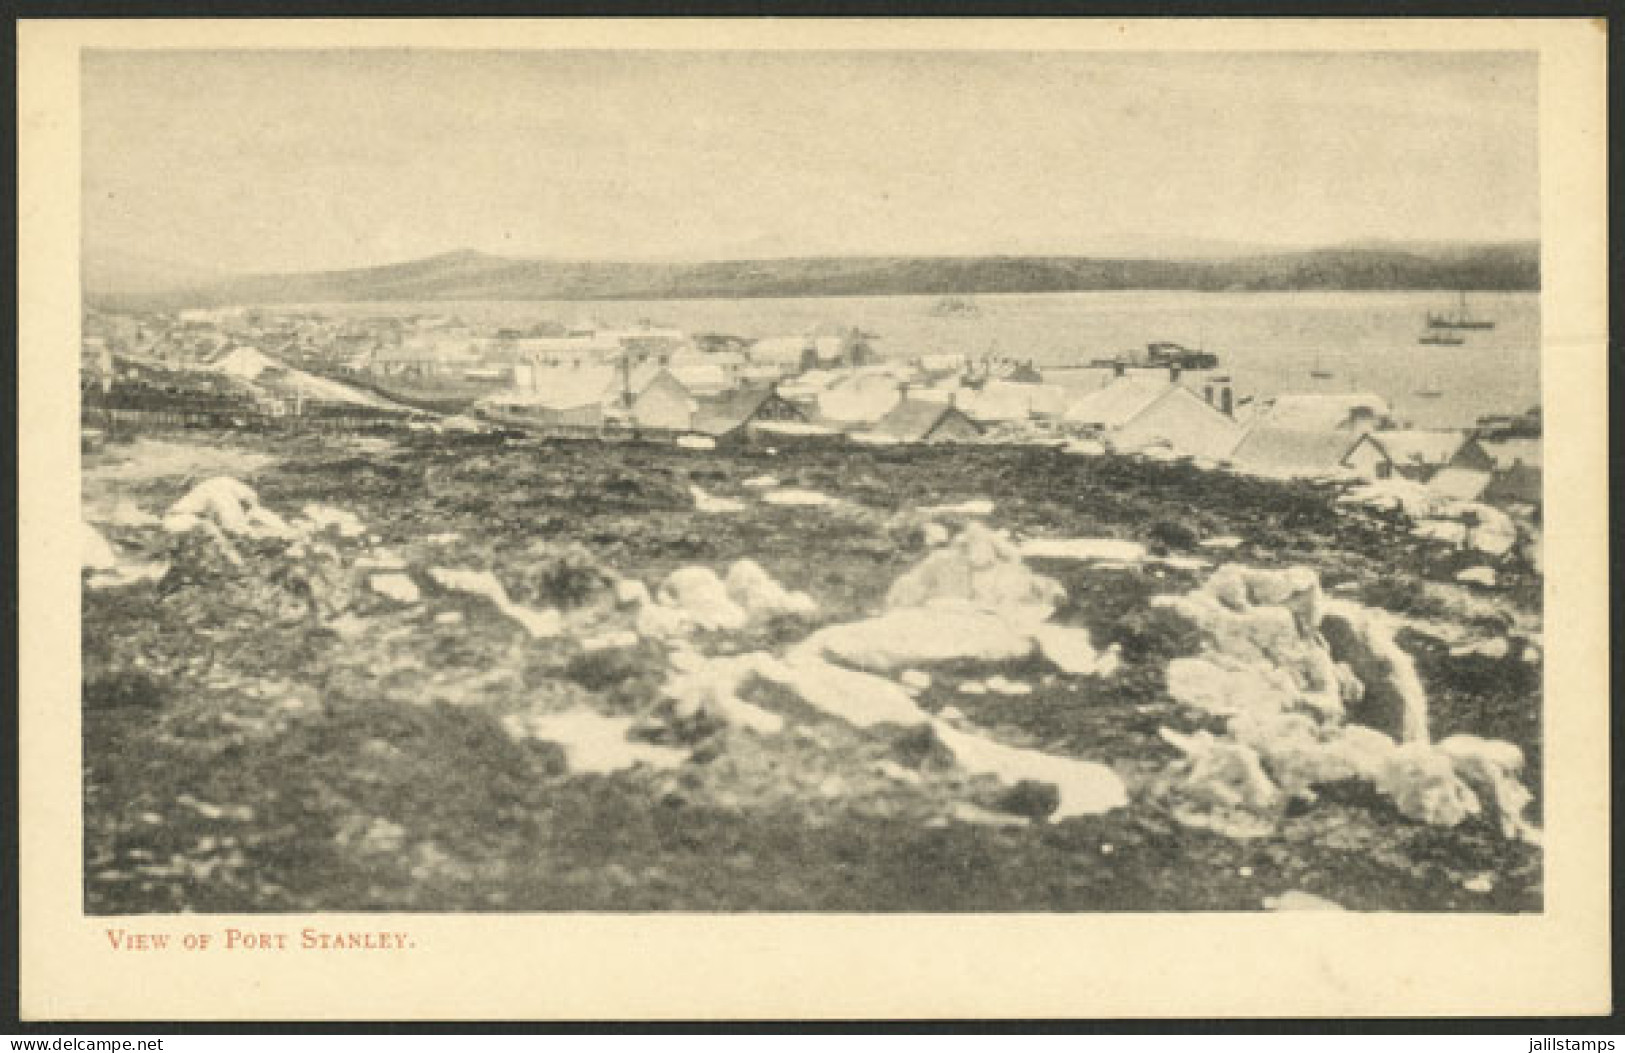 FALKLAND ISLANDS/MALVINAS: PORT STANLEY: General View, Old Unused Postcard, Very Fine Quality! - Falkland Islands